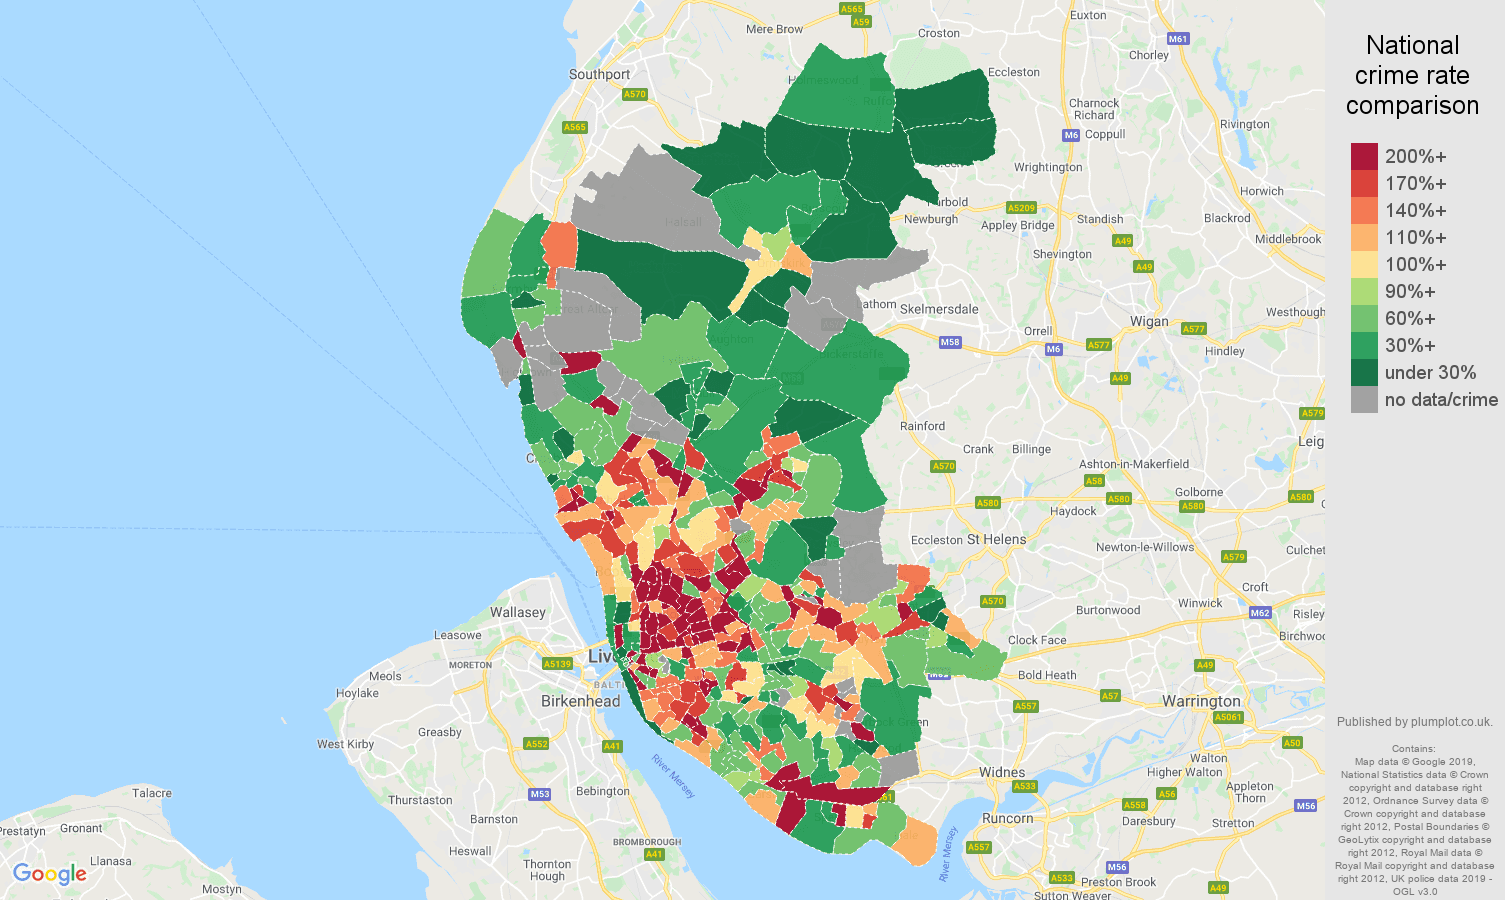 Liverpool public order crime rate comparison map